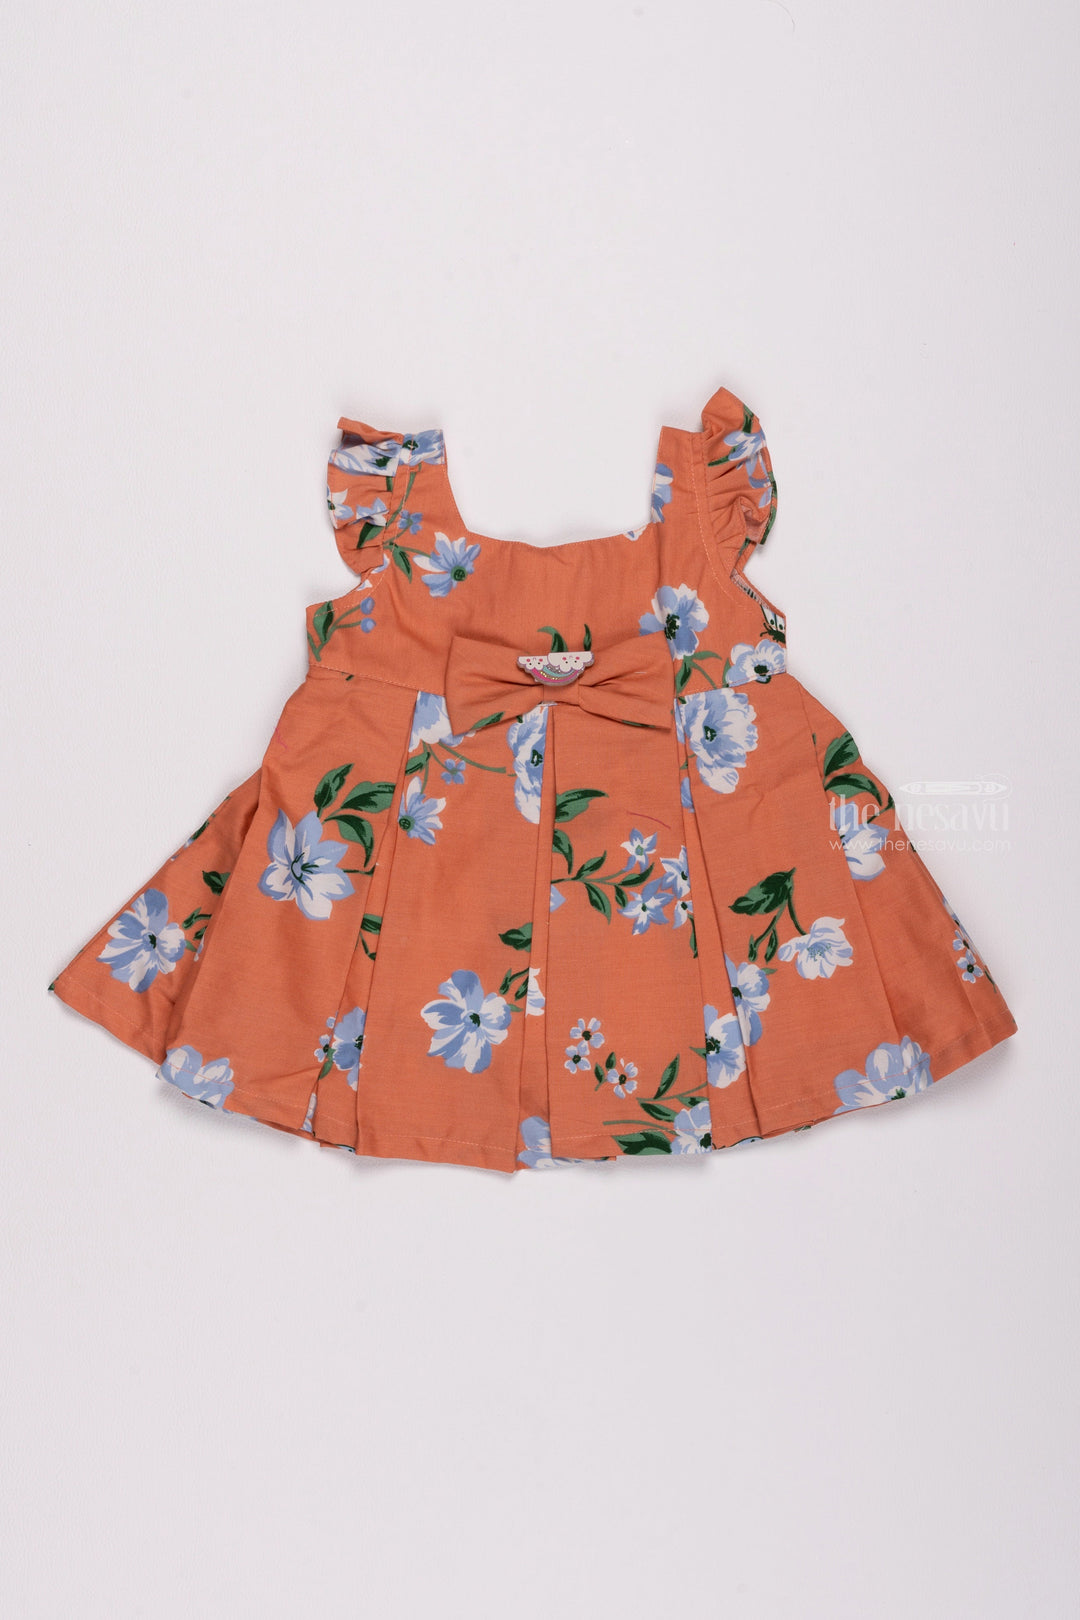 The Nesavu Baby Cotton Frocks Radiant Orange Ensemble for Baby Girls: Blossom-inspired Print, Pleated Delight with Bow Accent Nesavu 14 (6M) / Orange / Cotton BFJ467A-14 Premium Baby Frocks | Soft & Comfortable Dresses | The Nesavu